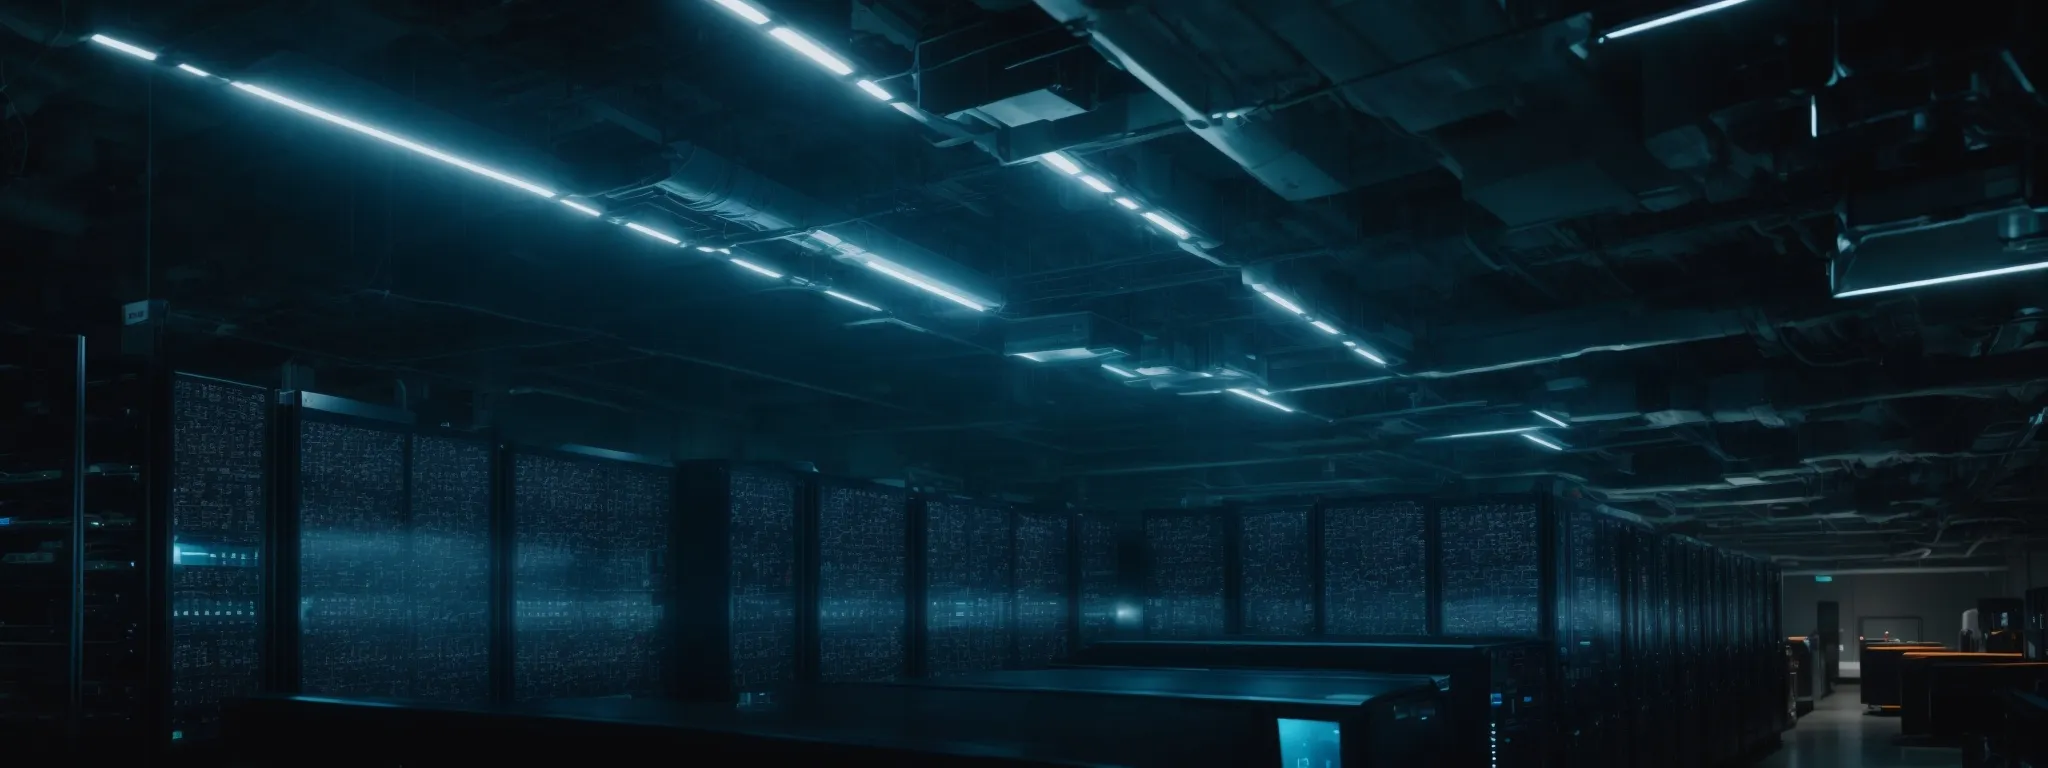 a wide array of futuristic cloud servers illuminating a dark data center.